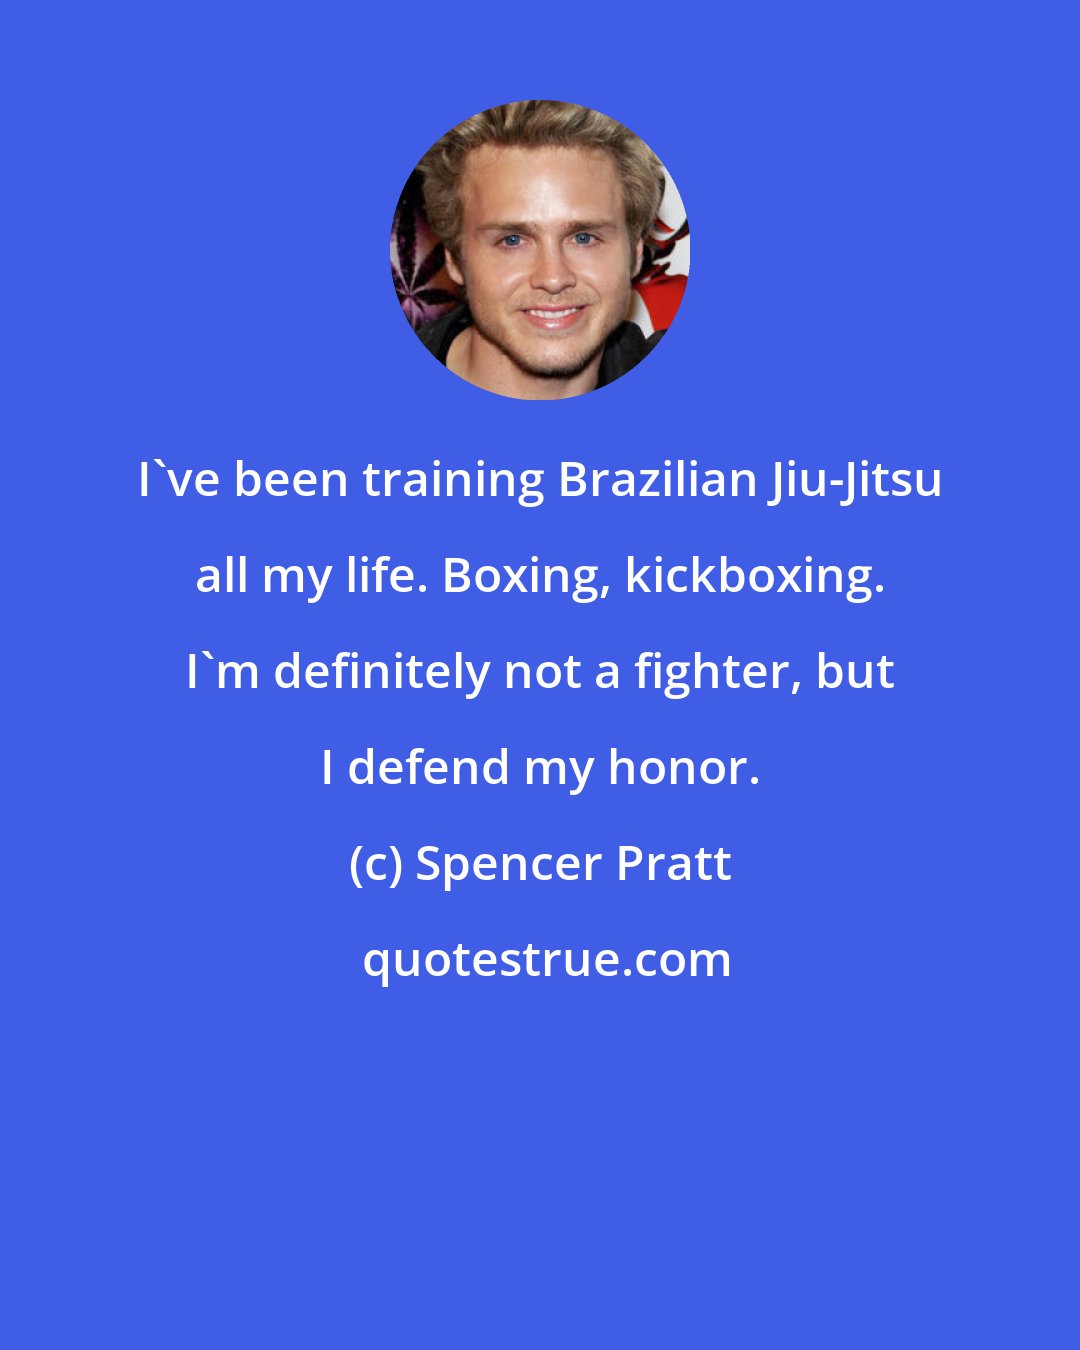 Spencer Pratt: I've been training Brazilian Jiu-Jitsu all my life. Boxing, kickboxing. I'm definitely not a fighter, but I defend my honor.